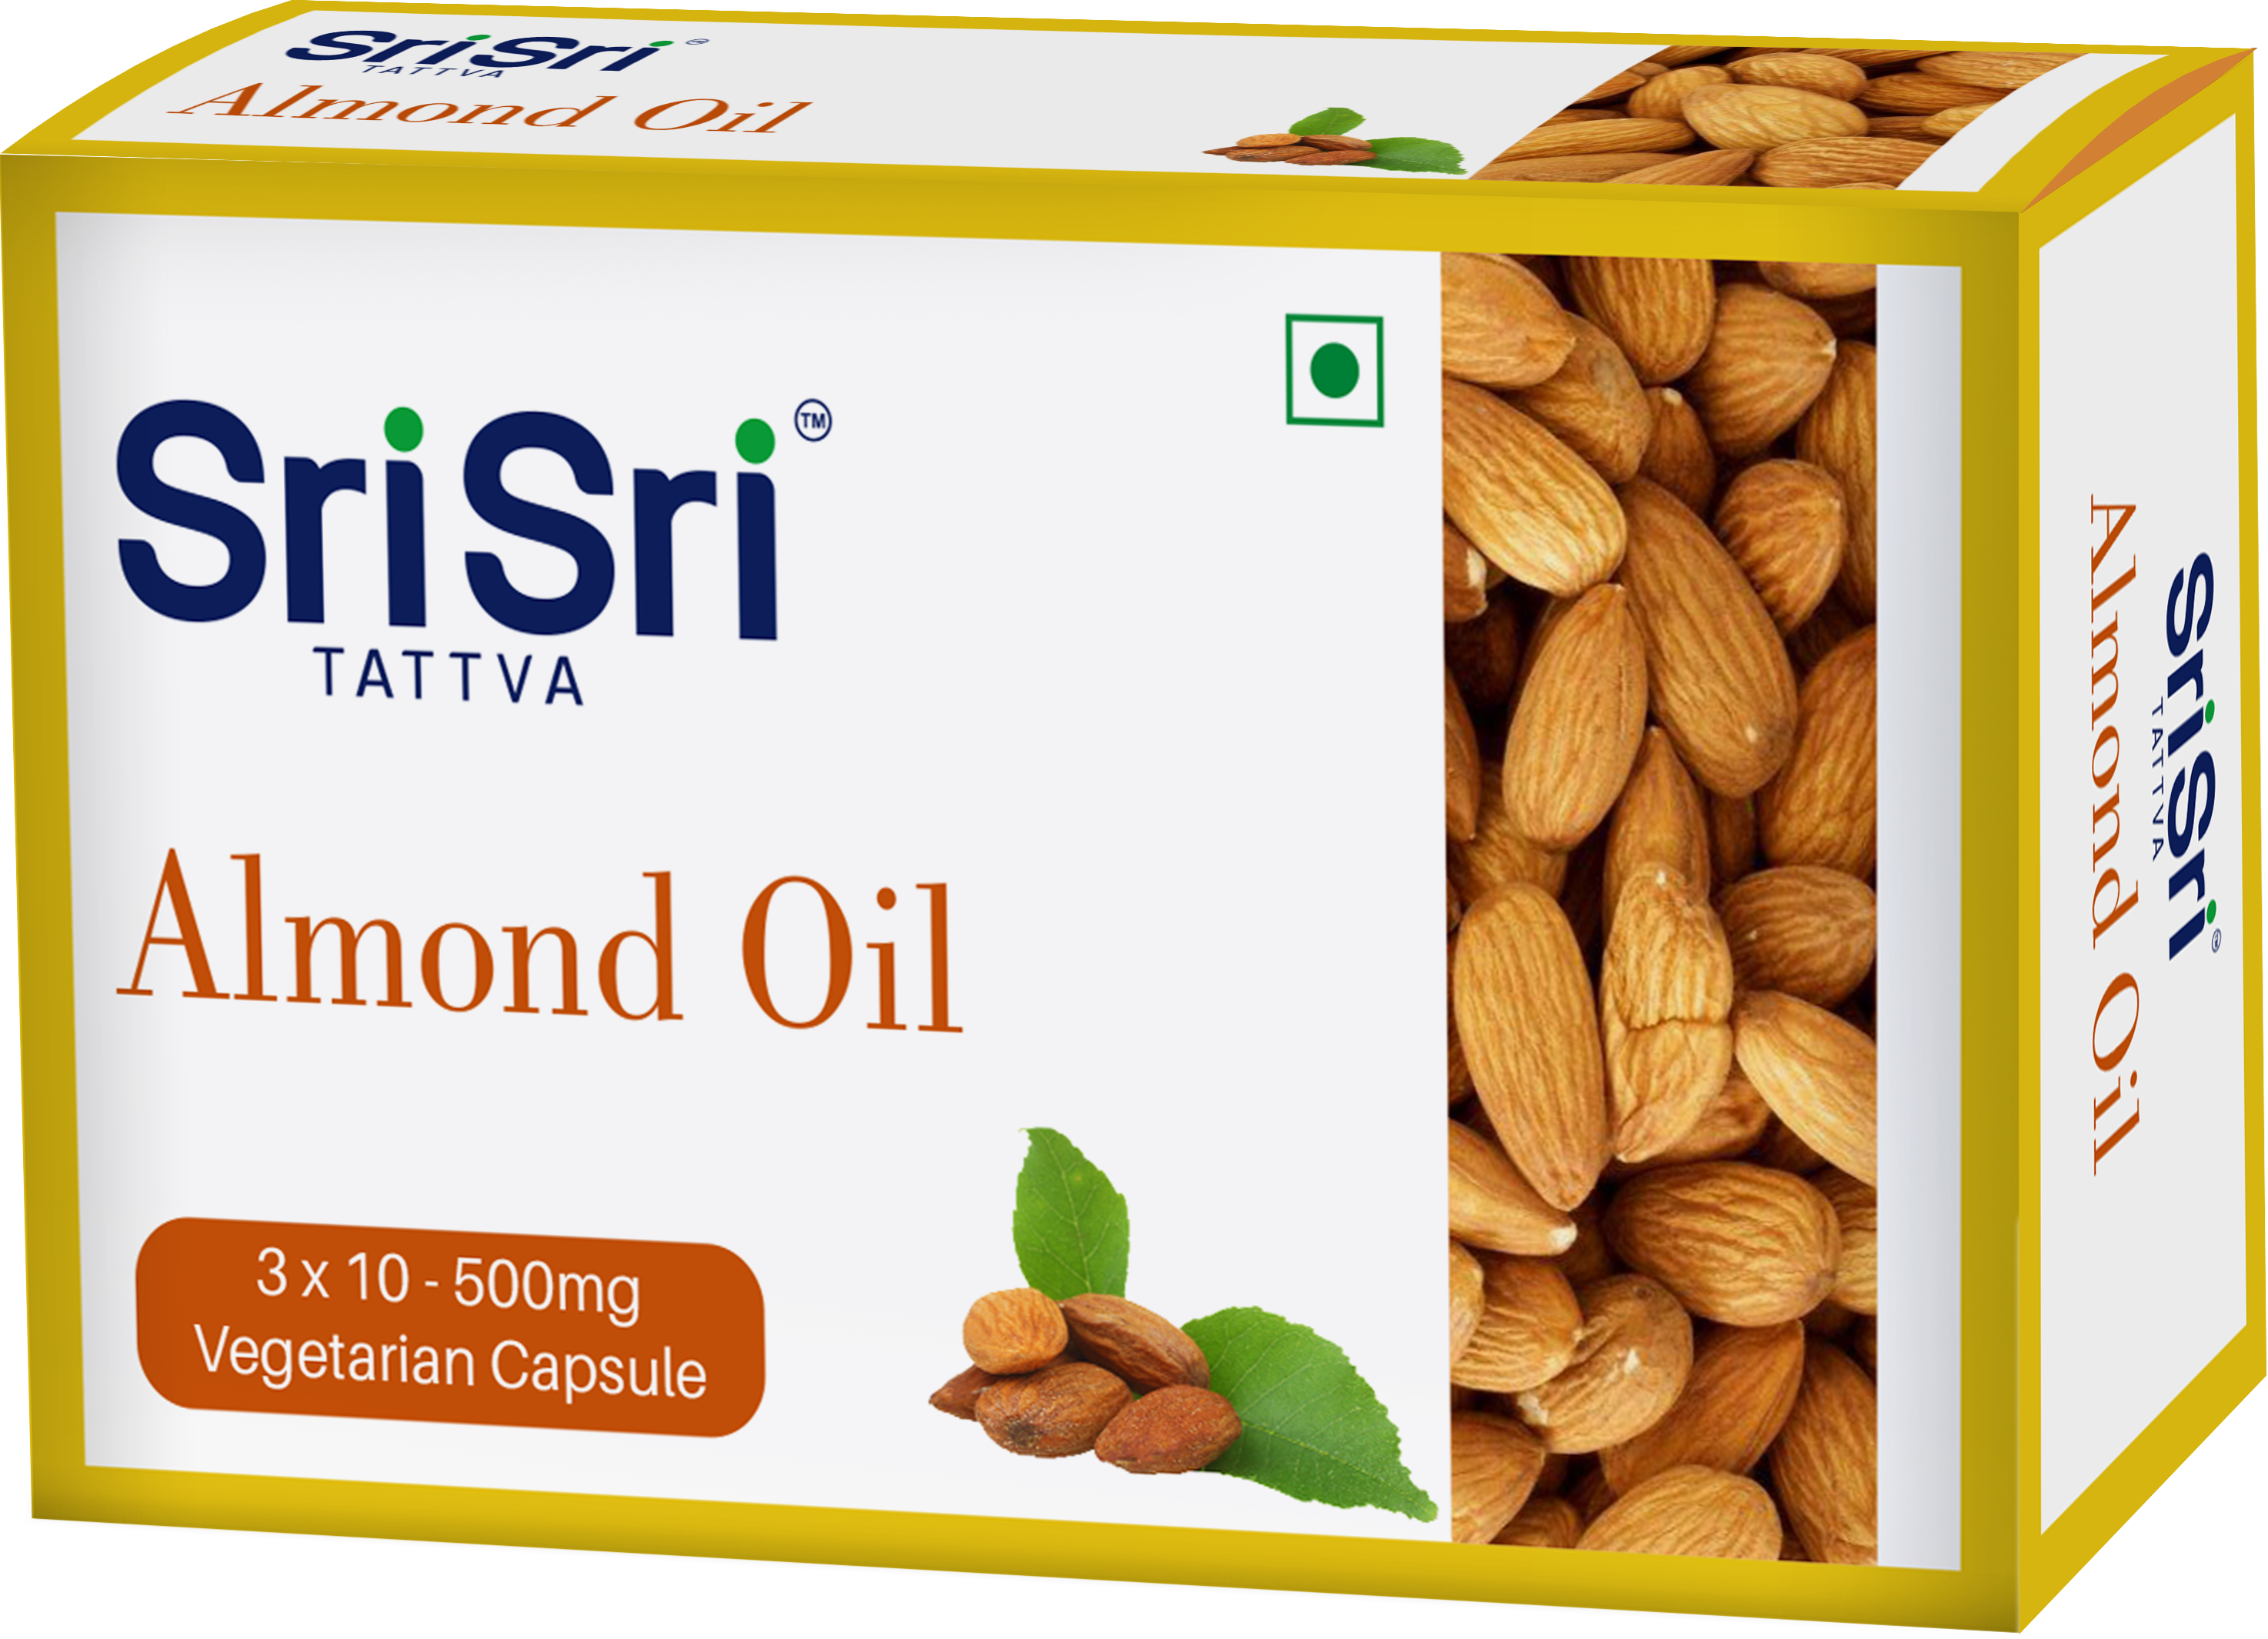 Buy Sri Sri Tattva Almond Oil Veg Capsule at Best Price Online